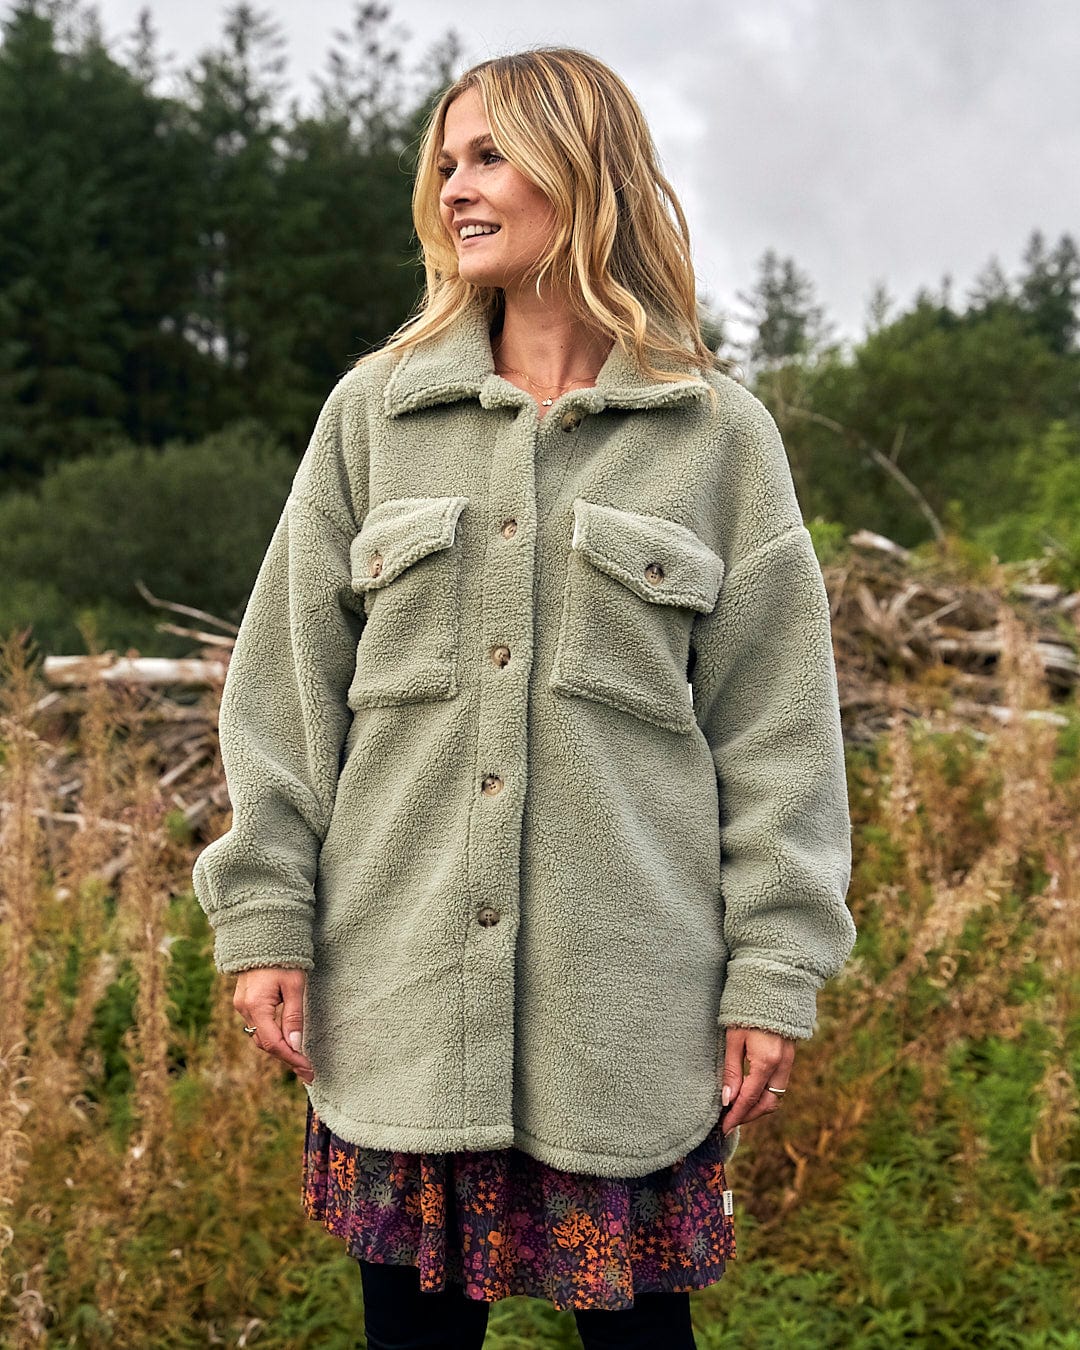 A woman is standing in a field wearing a Laurie - Womens Sherpa Fleece Coat - Green, from the brand Saltrock.